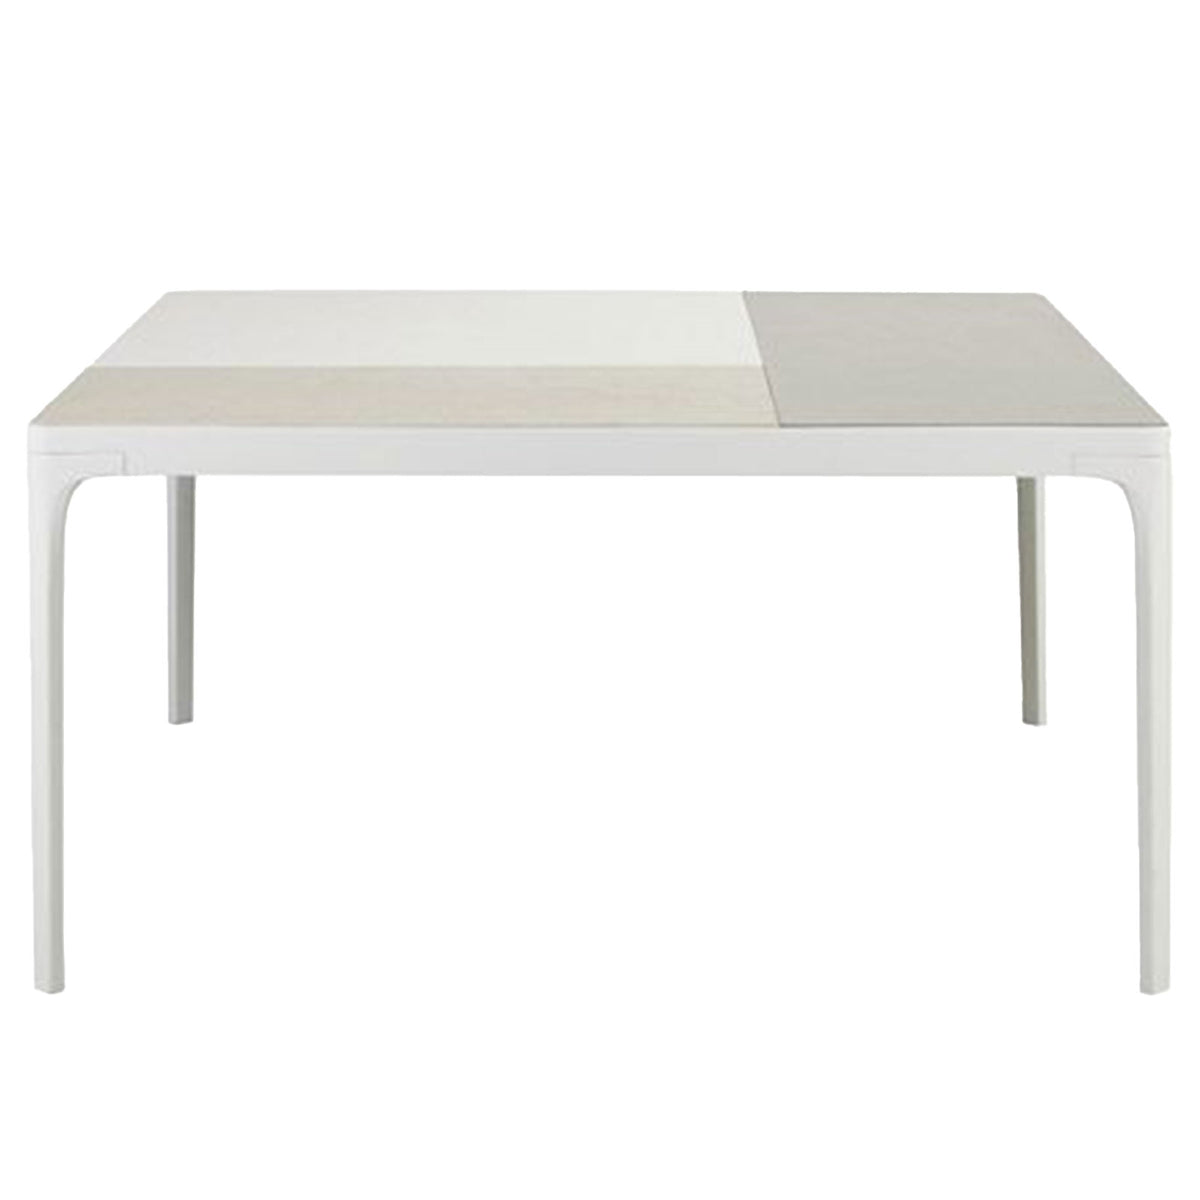 Play Outdoor Aluminium Xl Square Table, Grey